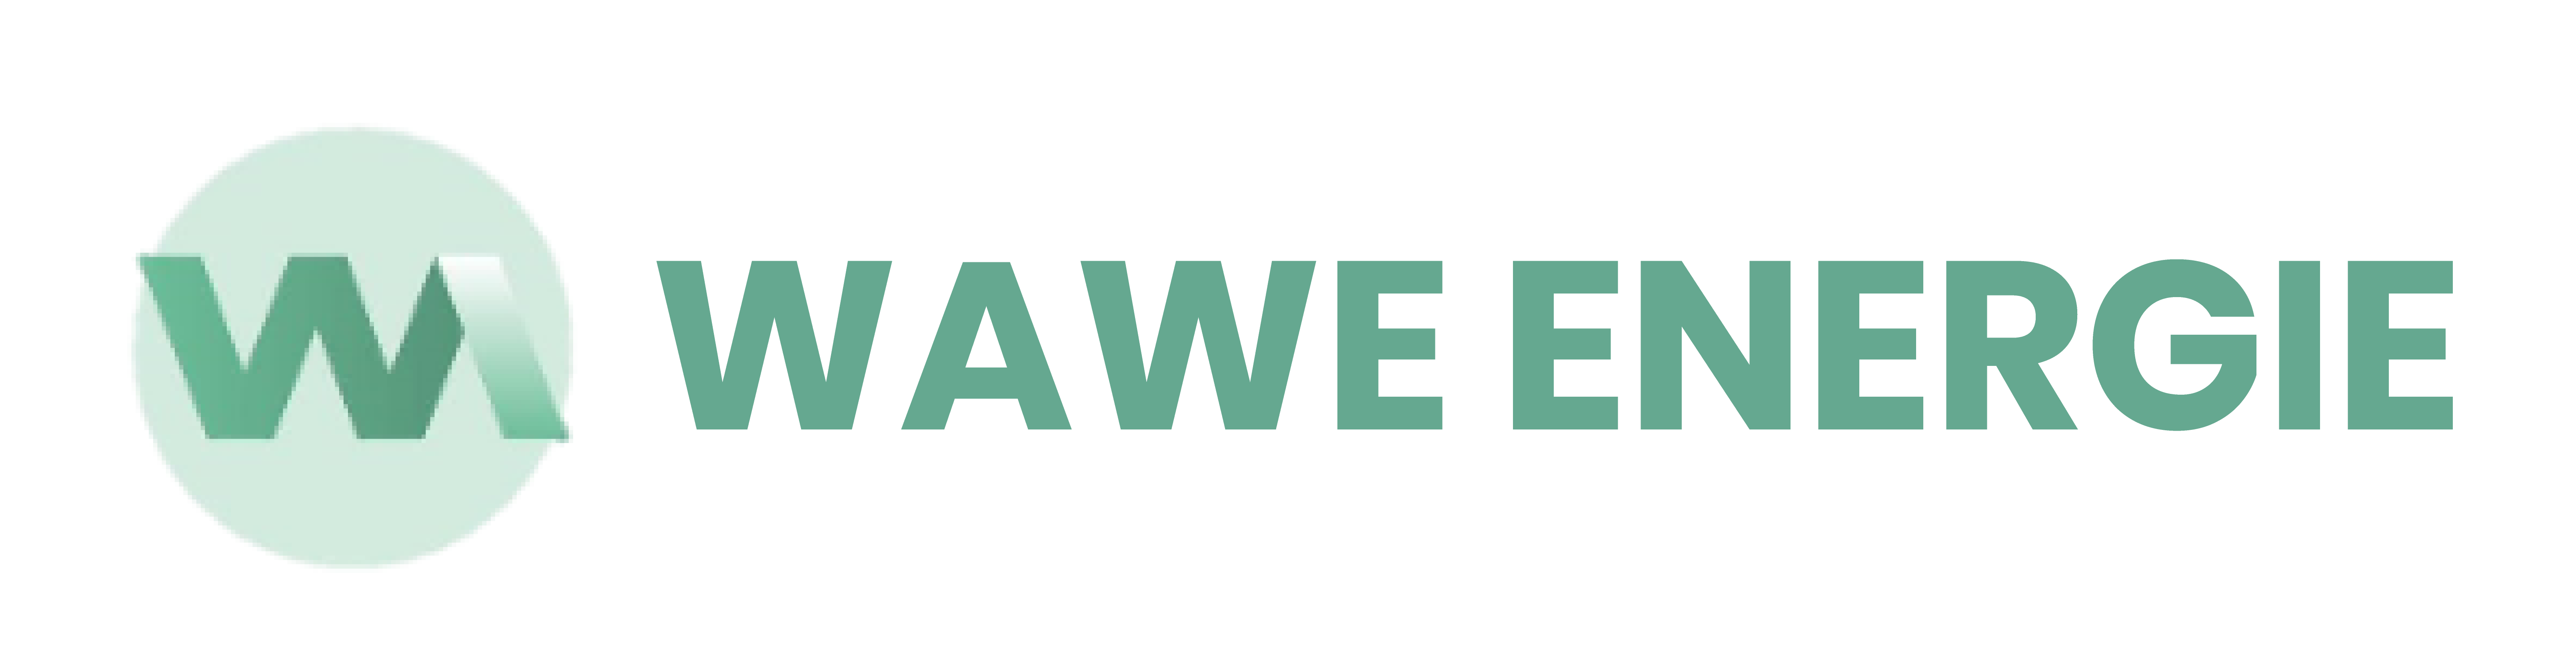 Wawe Energie Logo